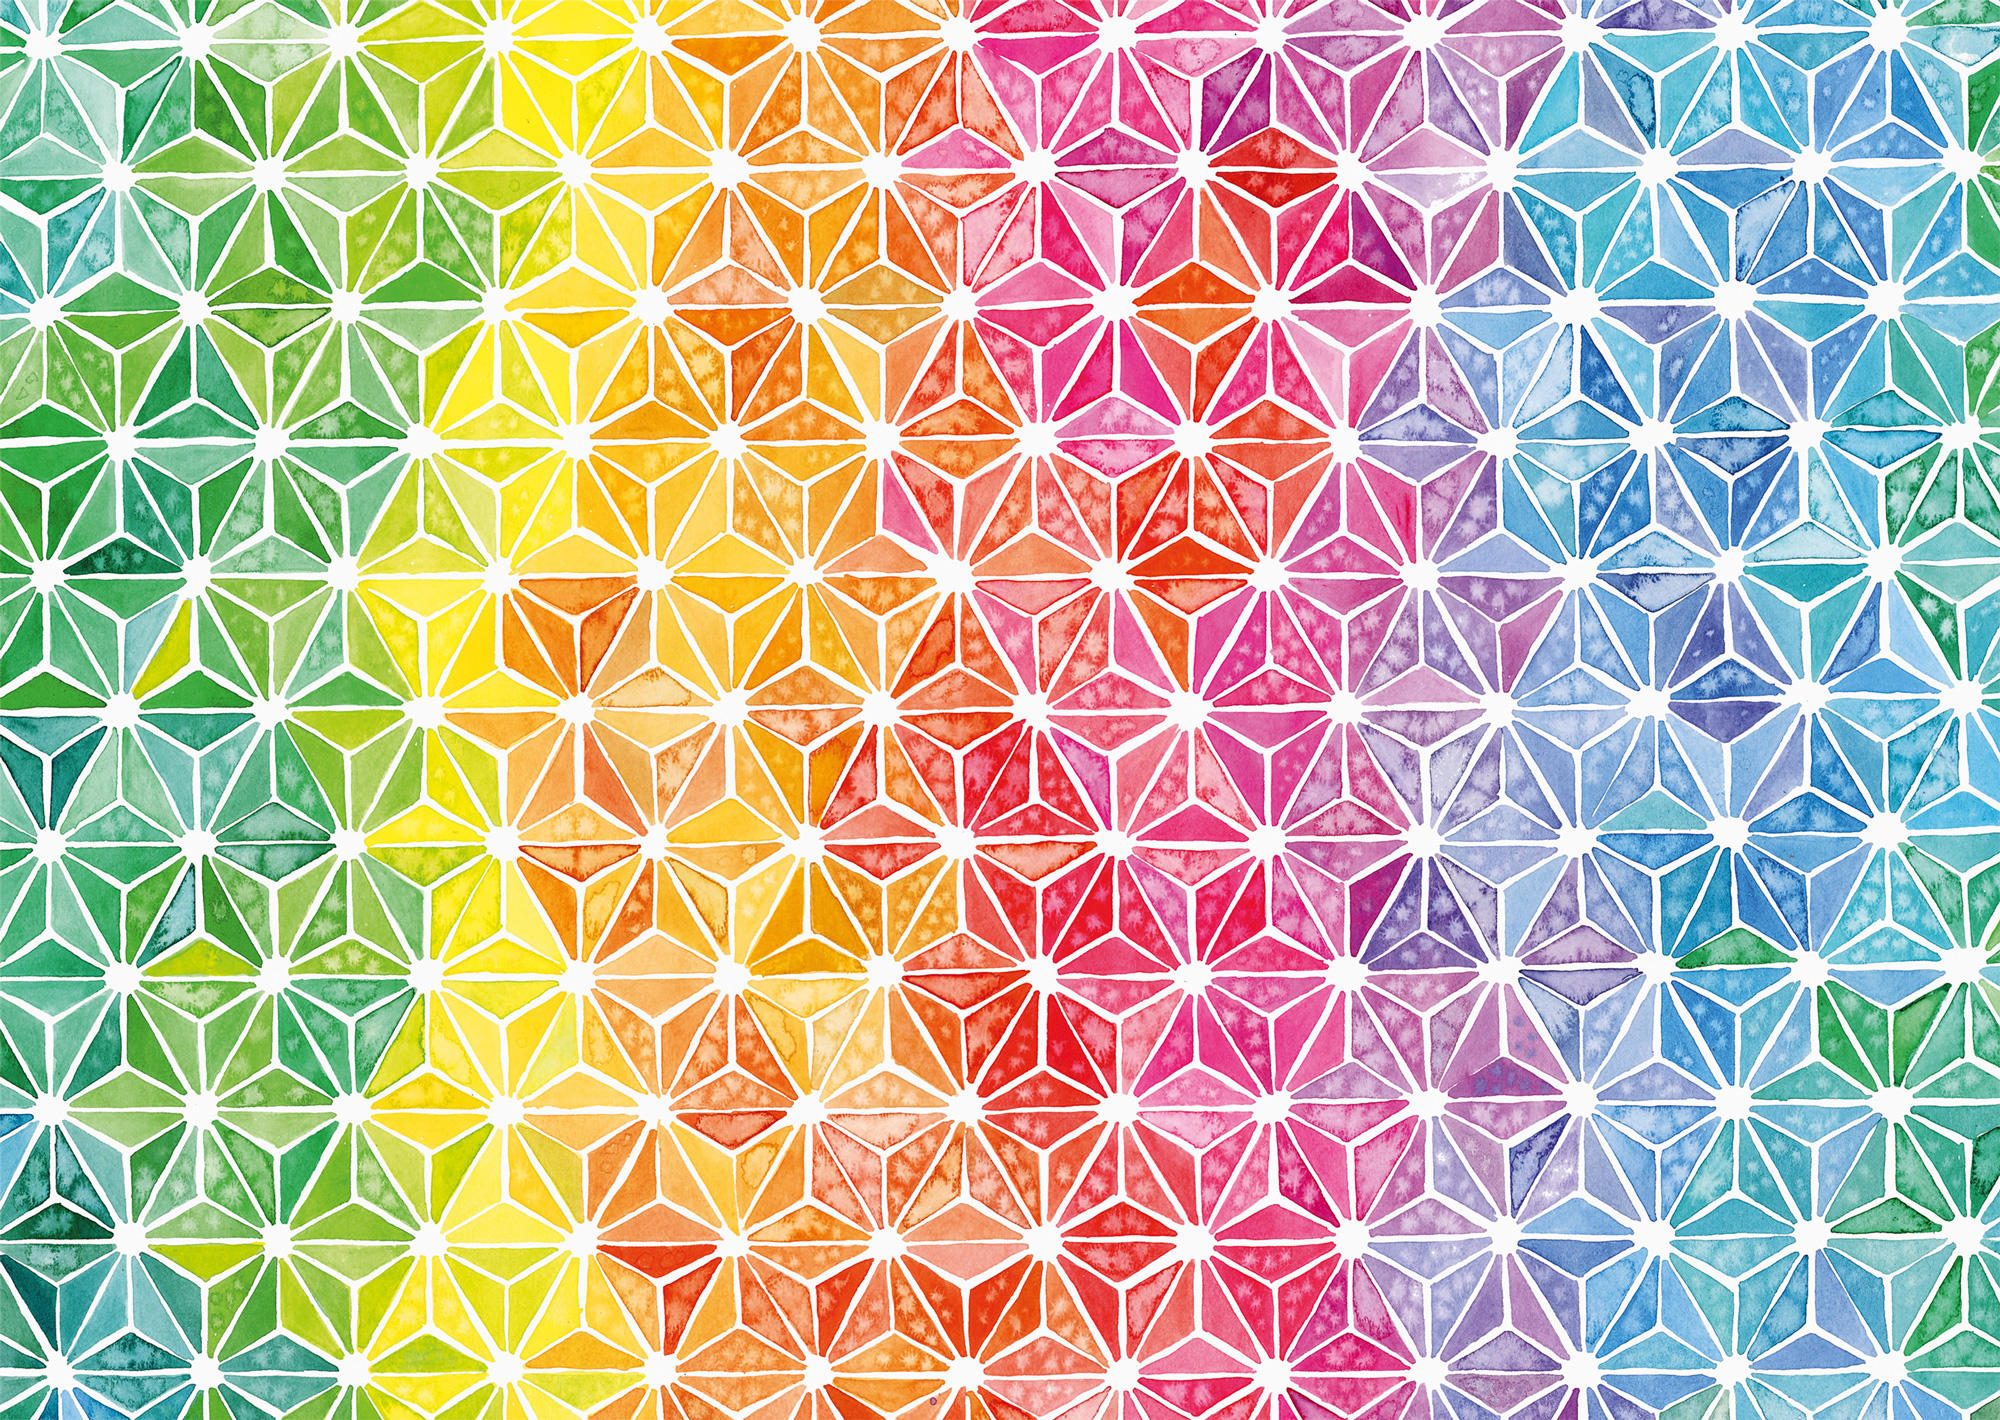 Puzzle Josie Lewis: Farverige trekanter